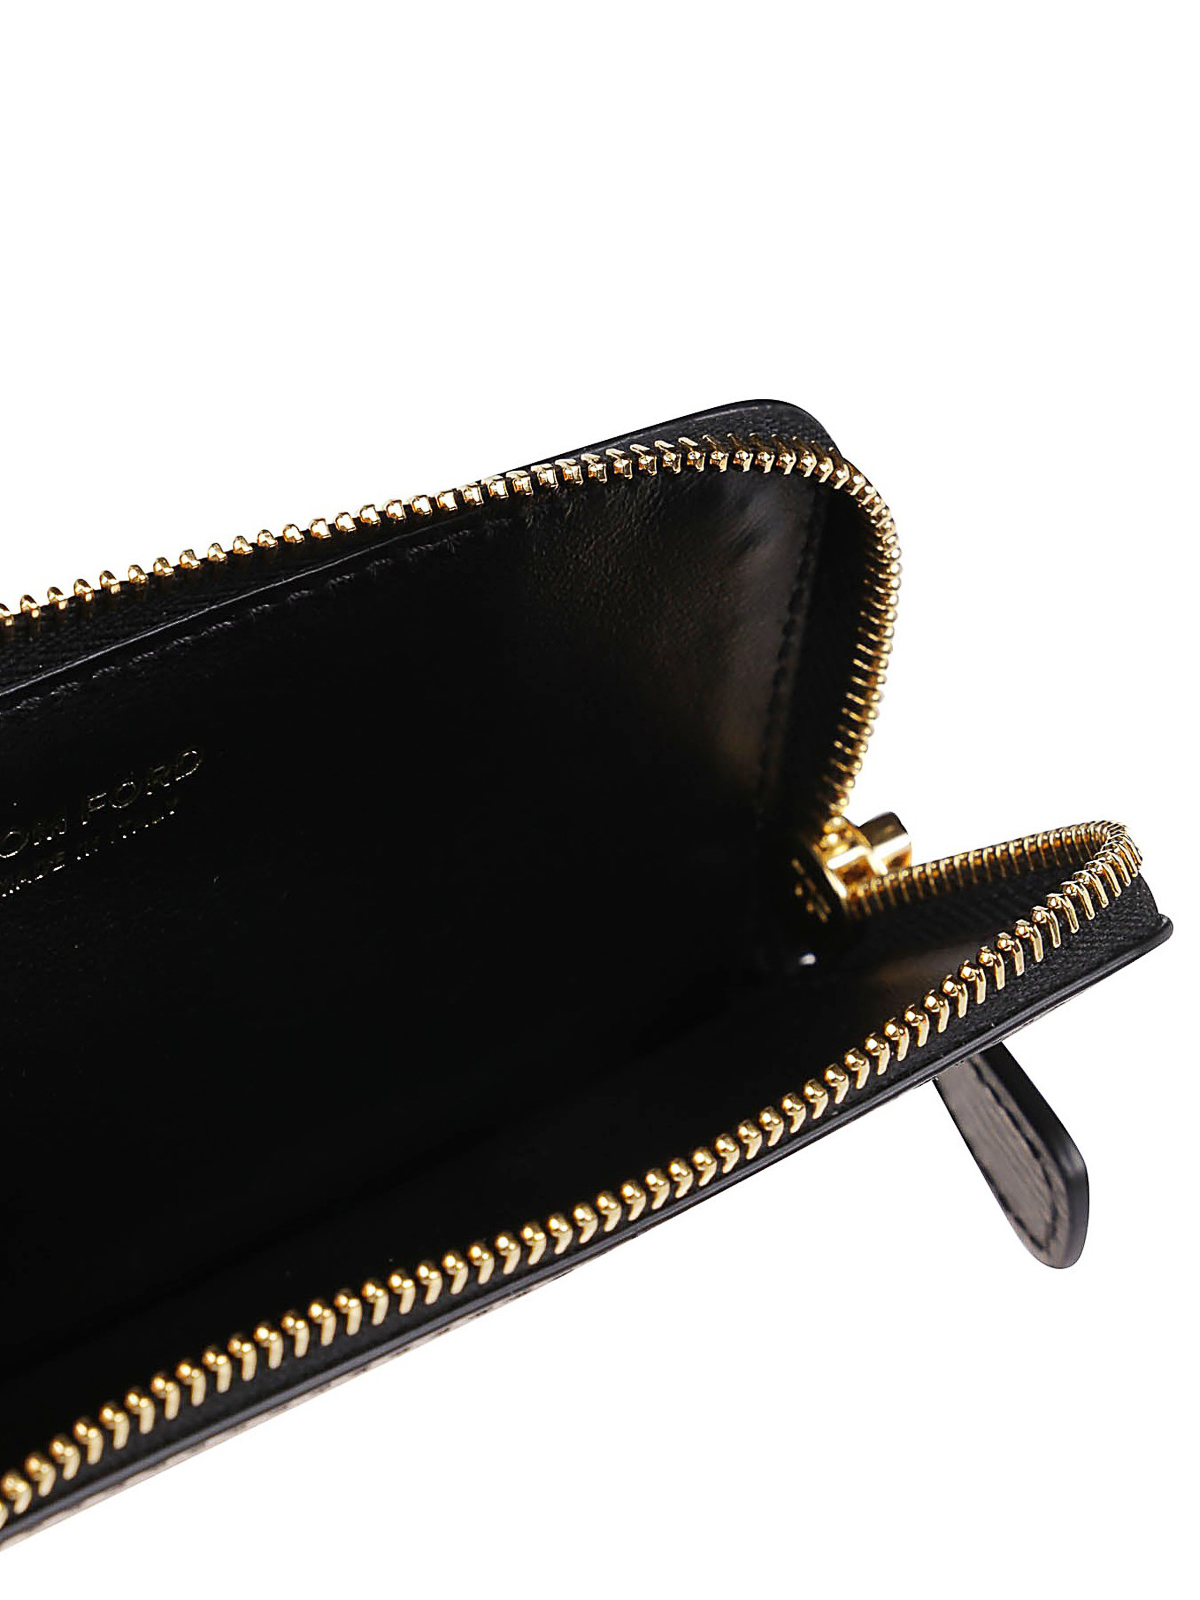 Zip-around leather wallet